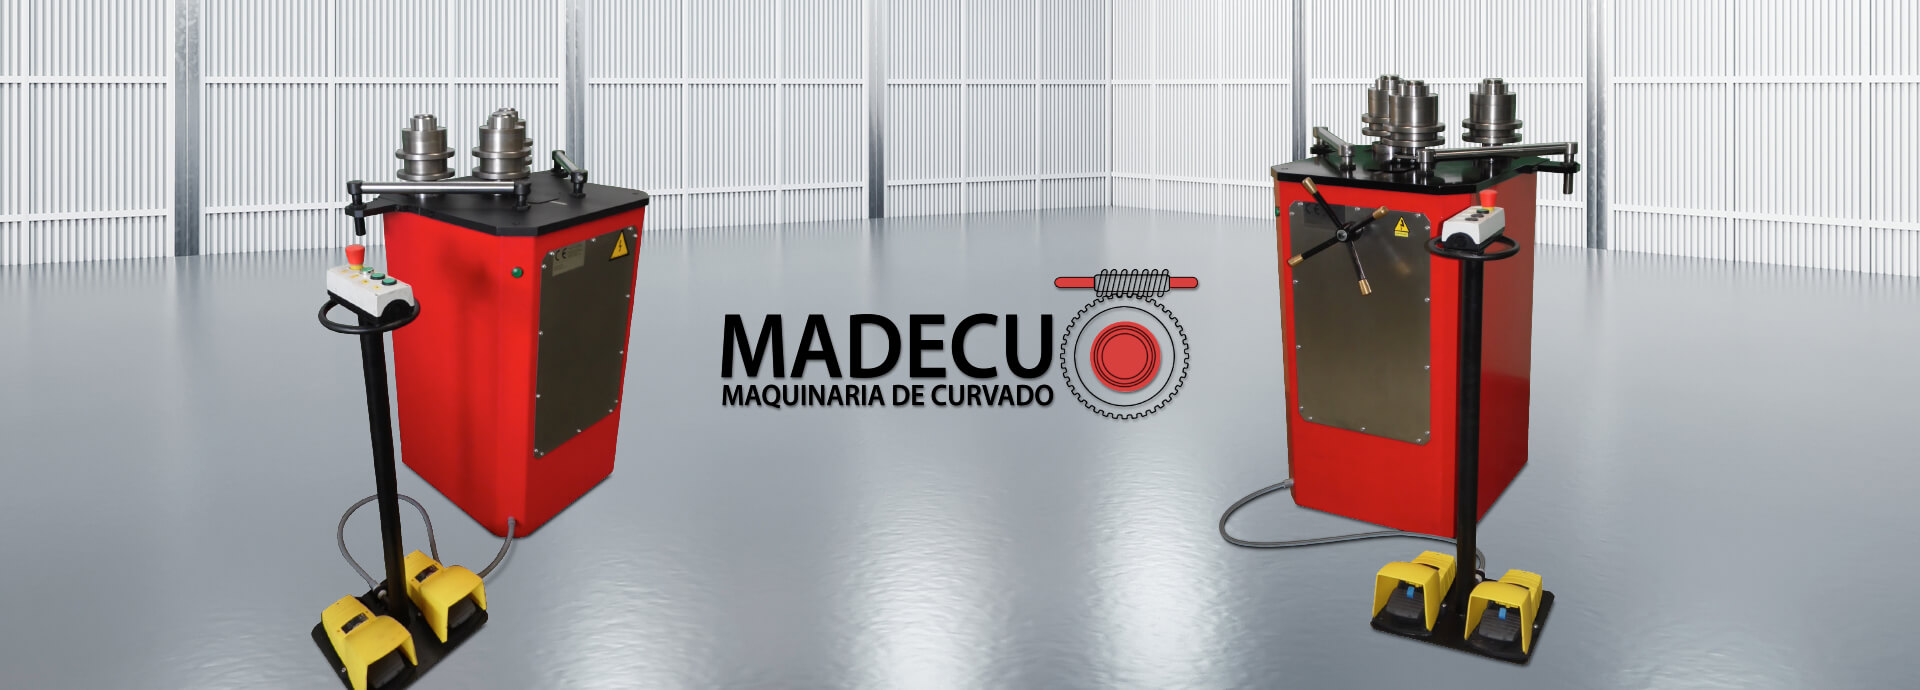 IPC-Metalmak | Maquinaria Madecu